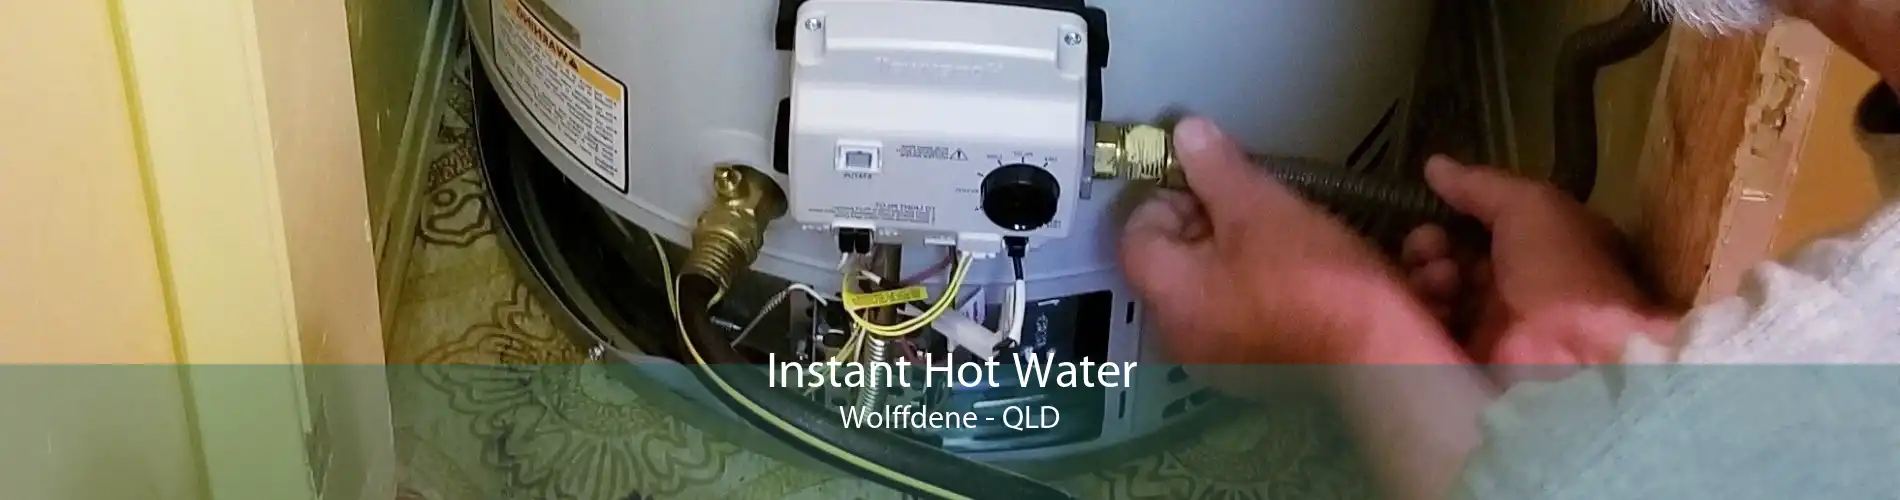 Instant Hot Water Wolffdene - QLD